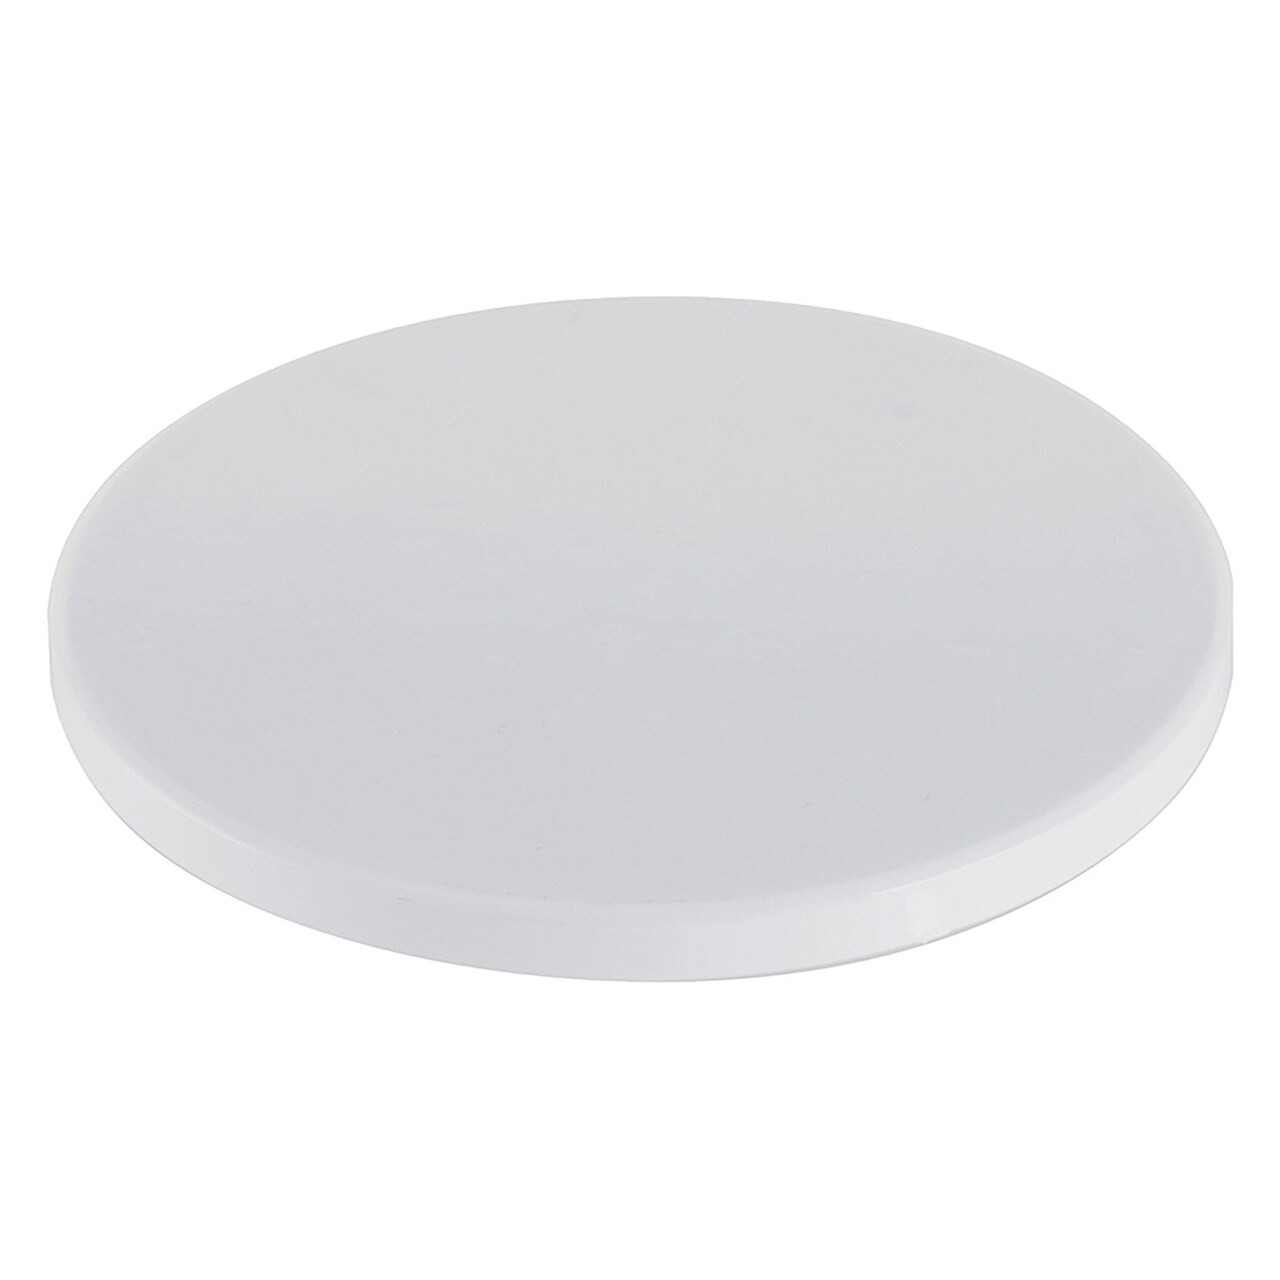 Craft Express Ceramic Sublimation Coasters 4/Pkg-White, 3.5 Diameter